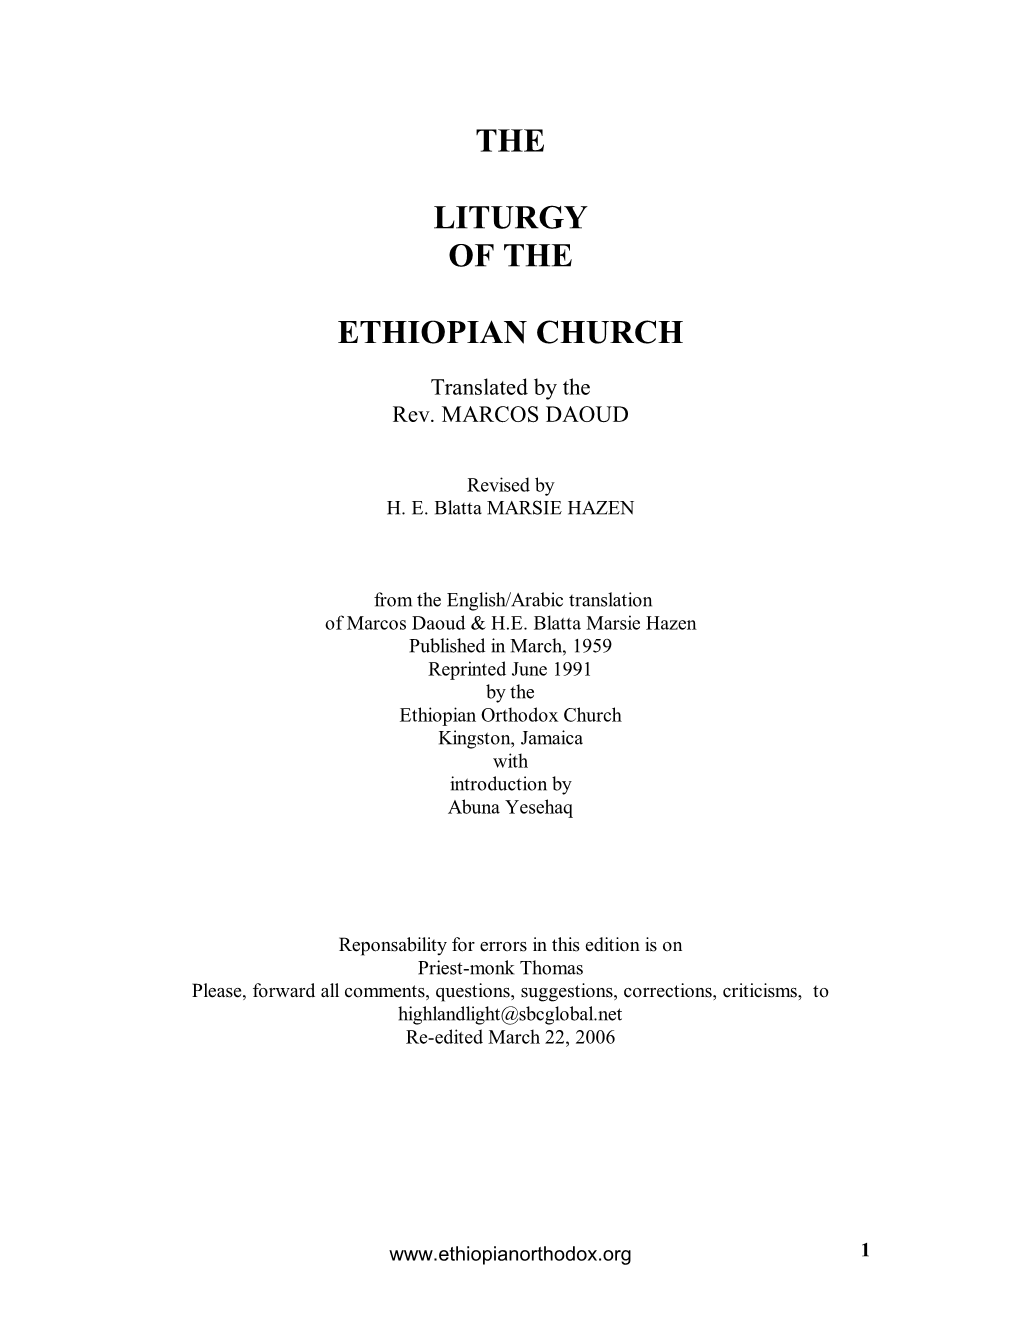 The Liturgy of the Ethiopian Church